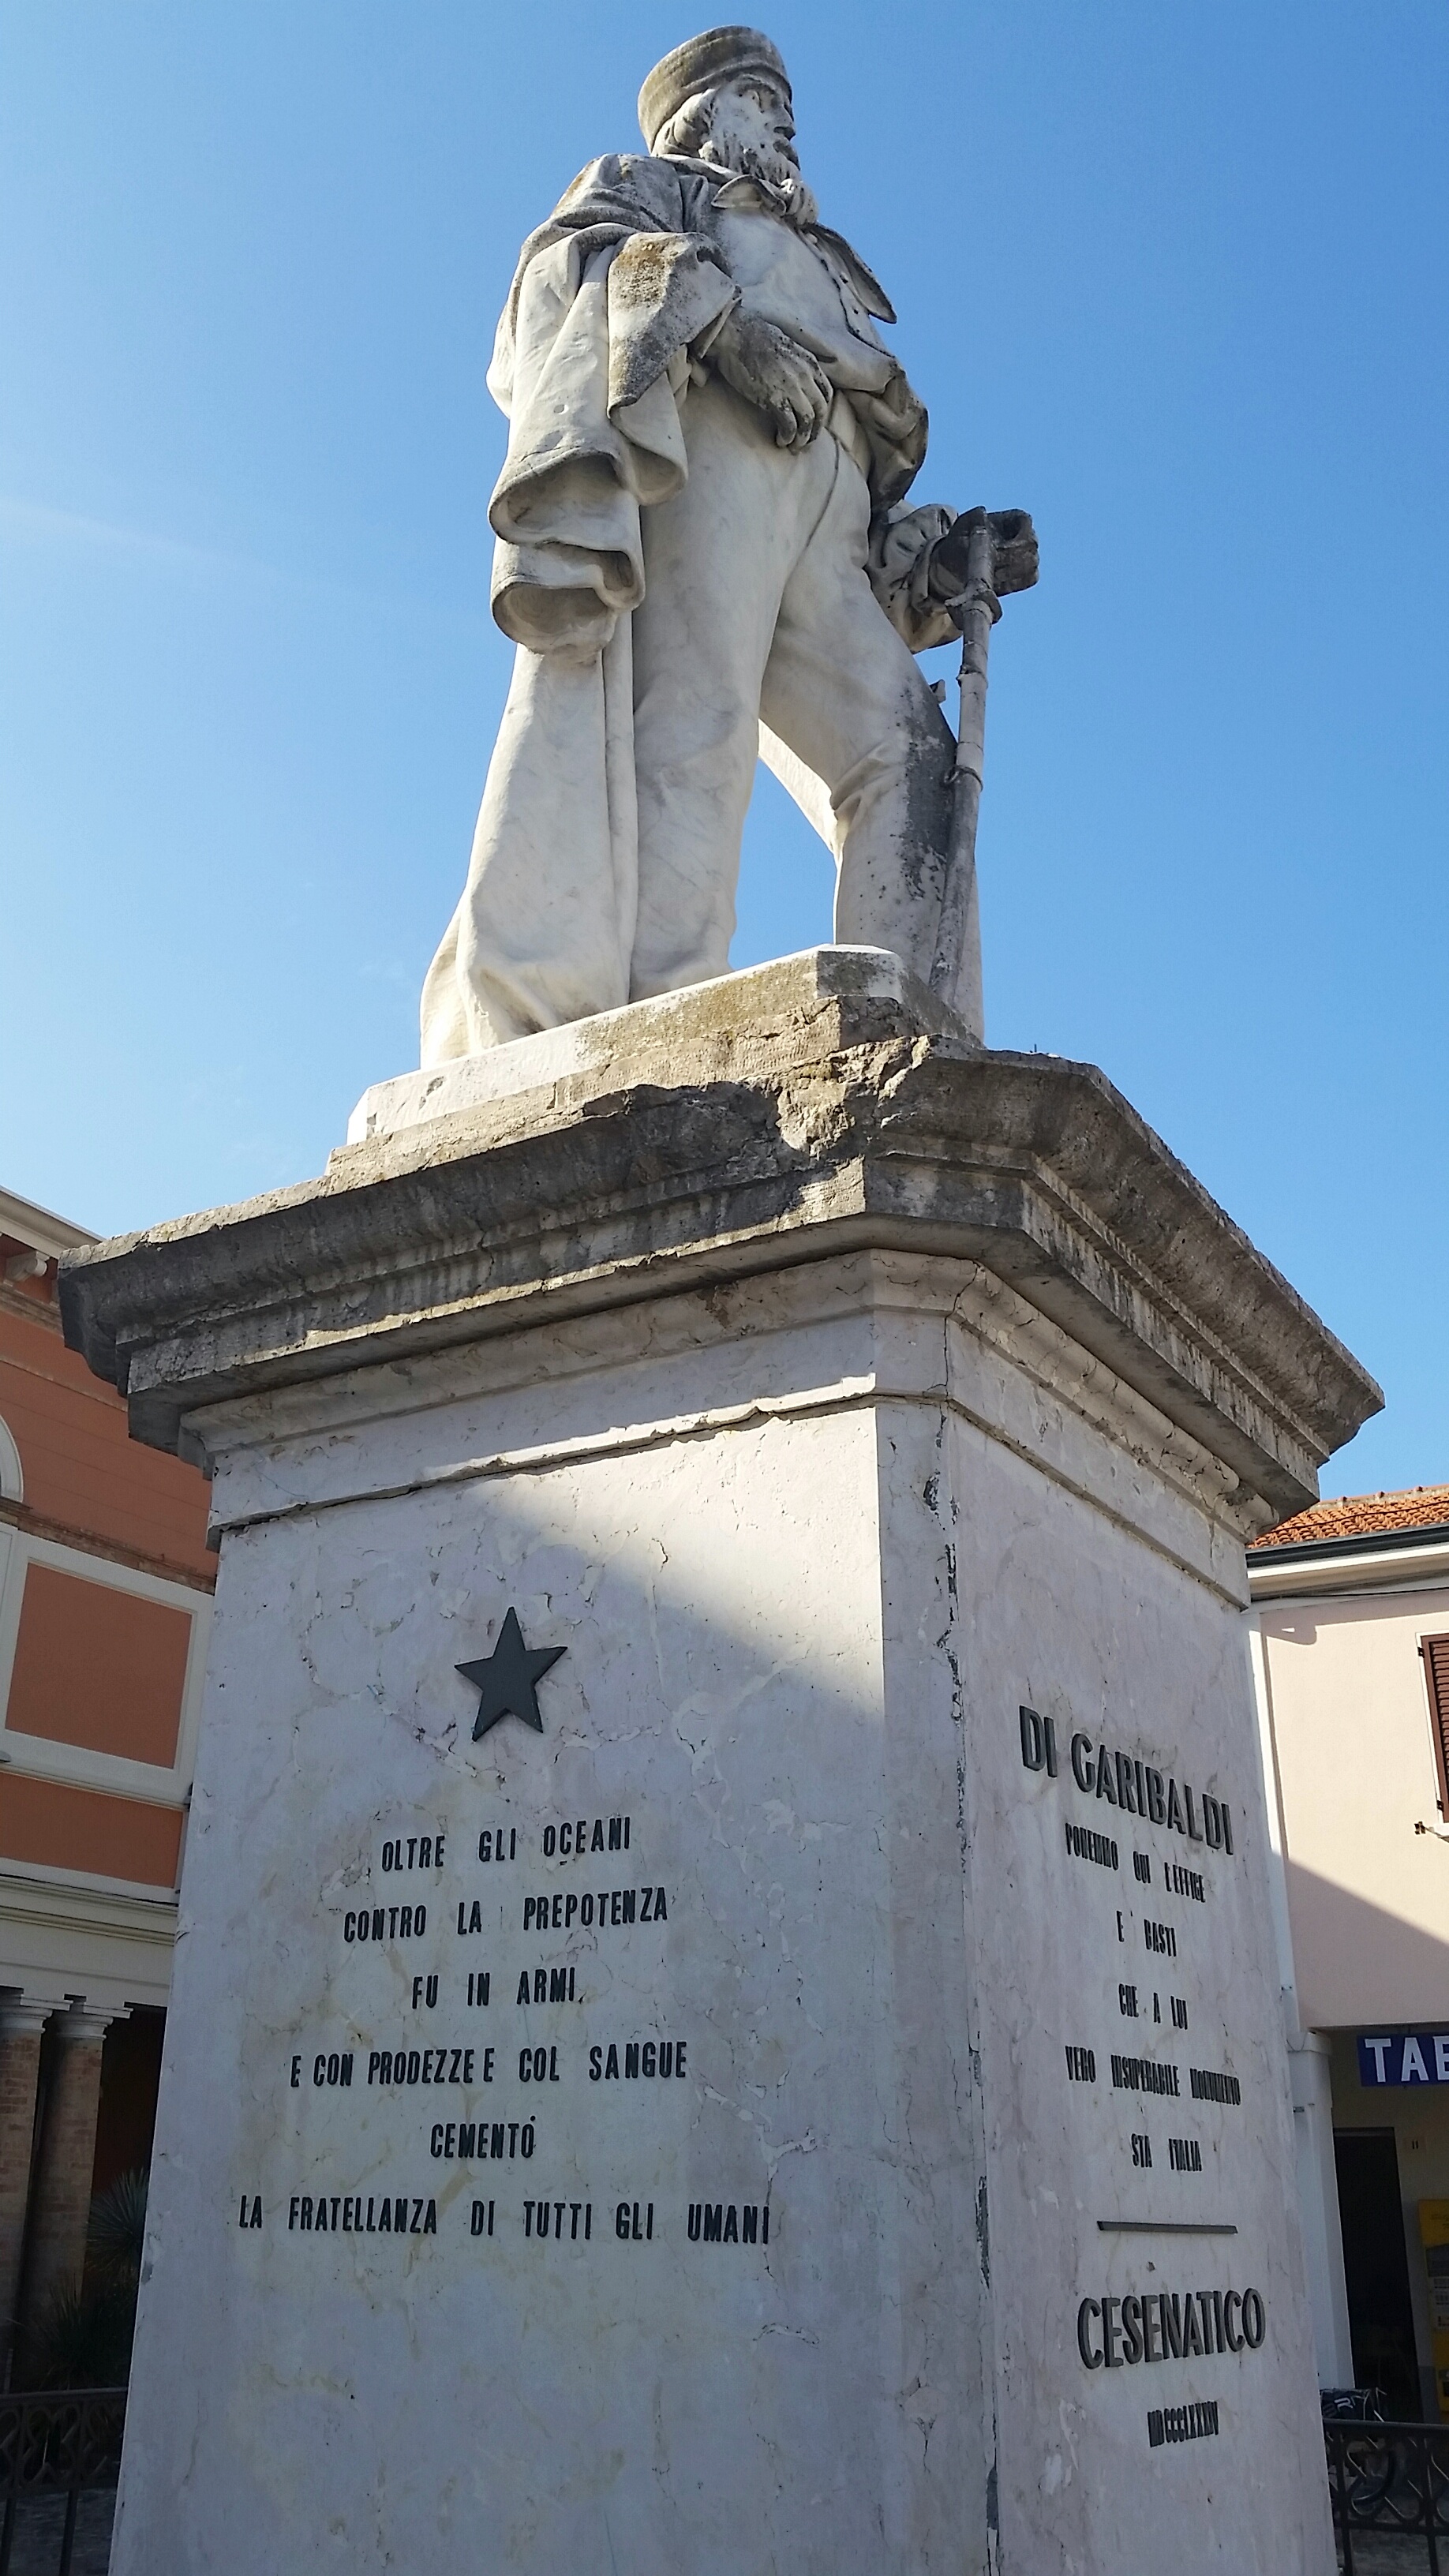 foto: https://upload.wikimedia.org/wikipedia/commons/d/d9/La_statua_di_Giuseppe_Garibaldi.jpg